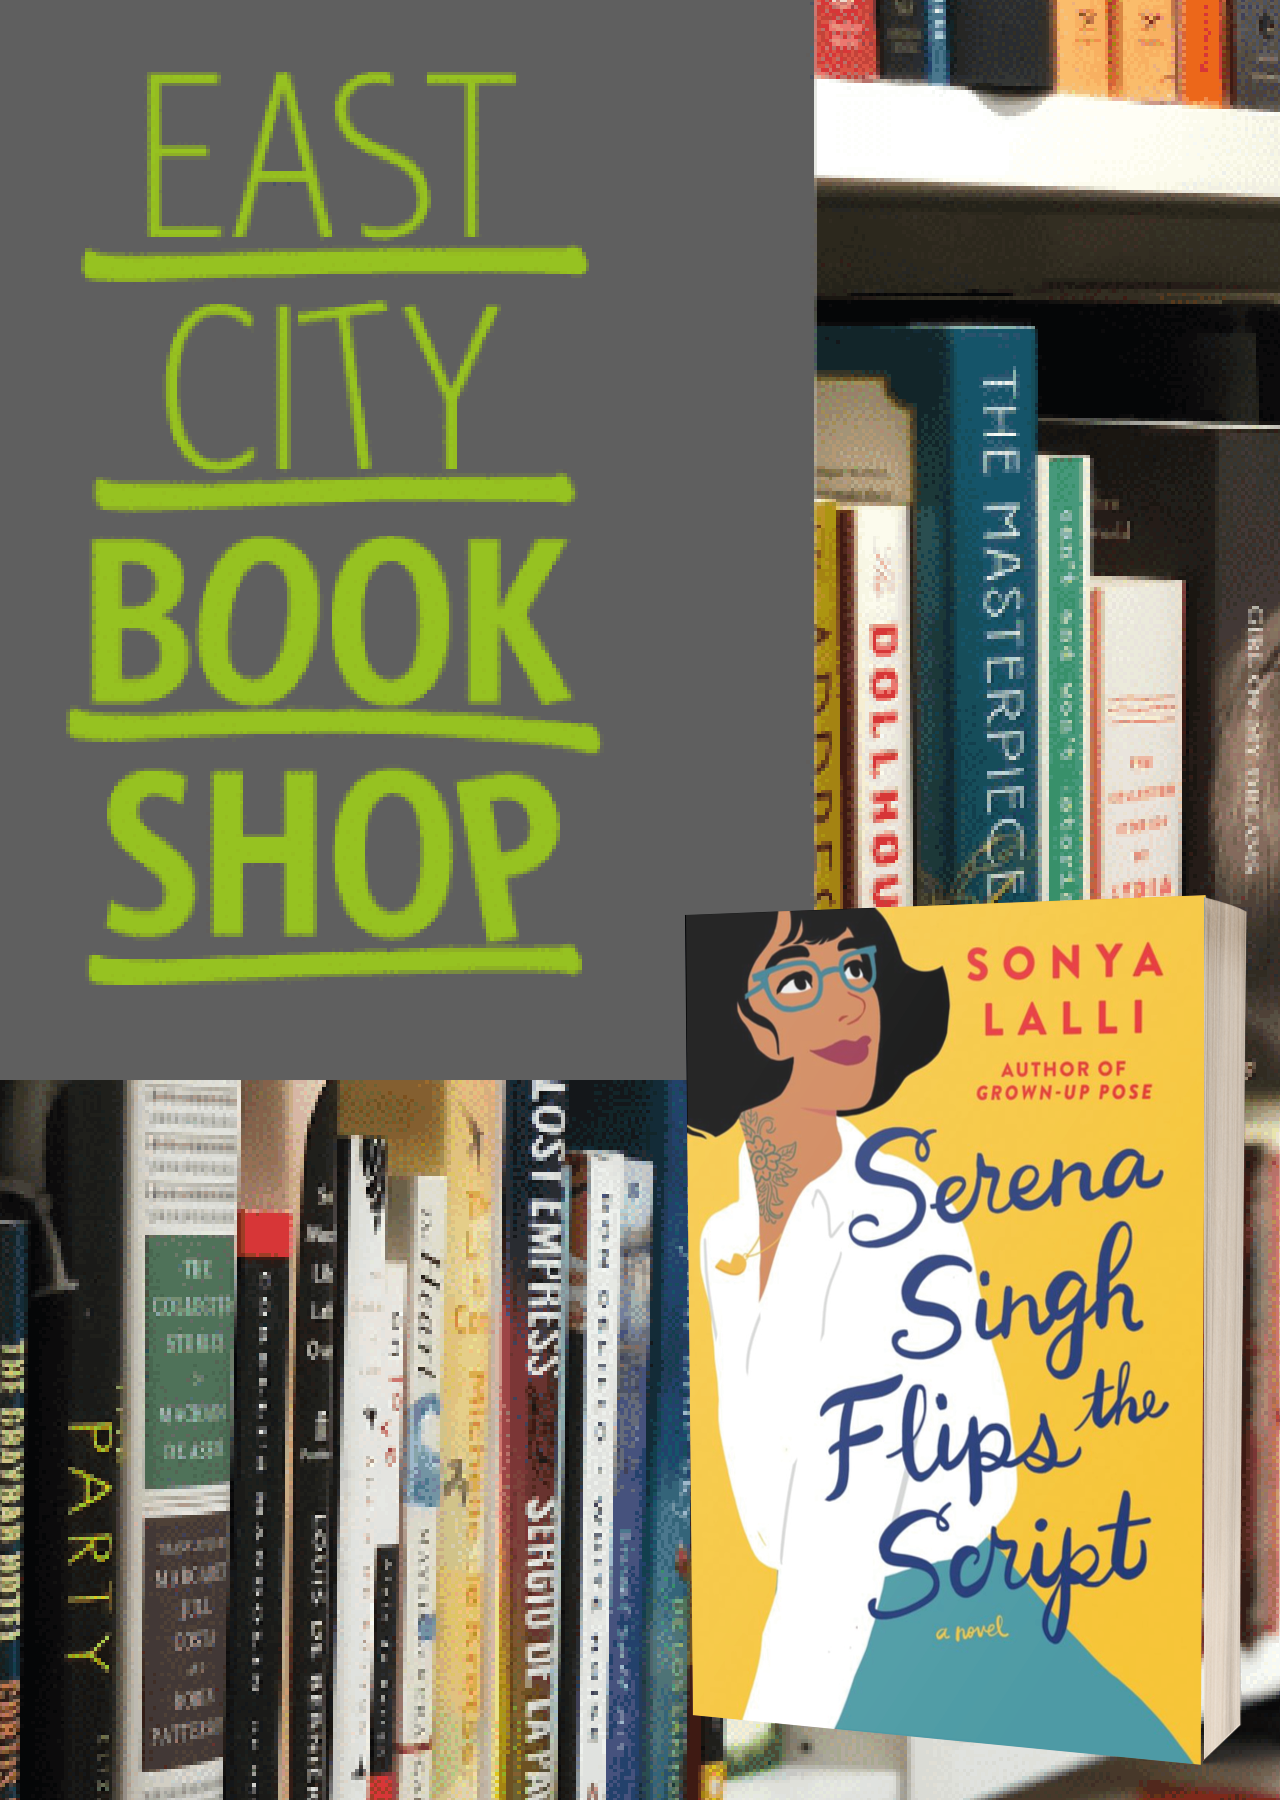 East City Book Shop event